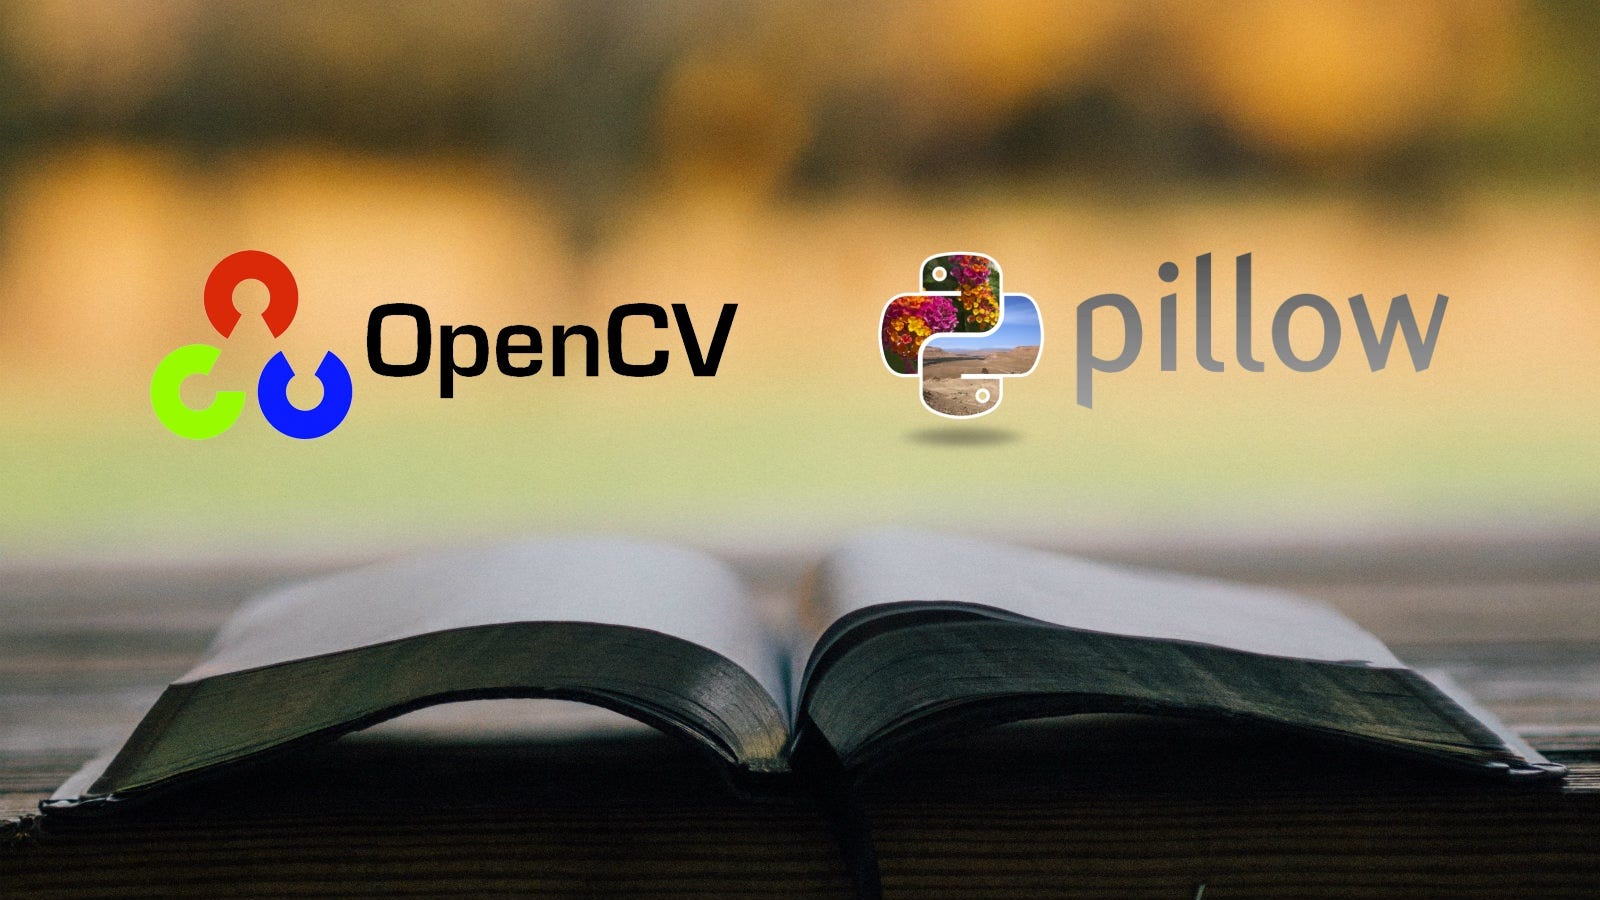 The Ultimate Handbook for OpenCV & Pillow | by Steins | Analytics Vidhya |  Medium